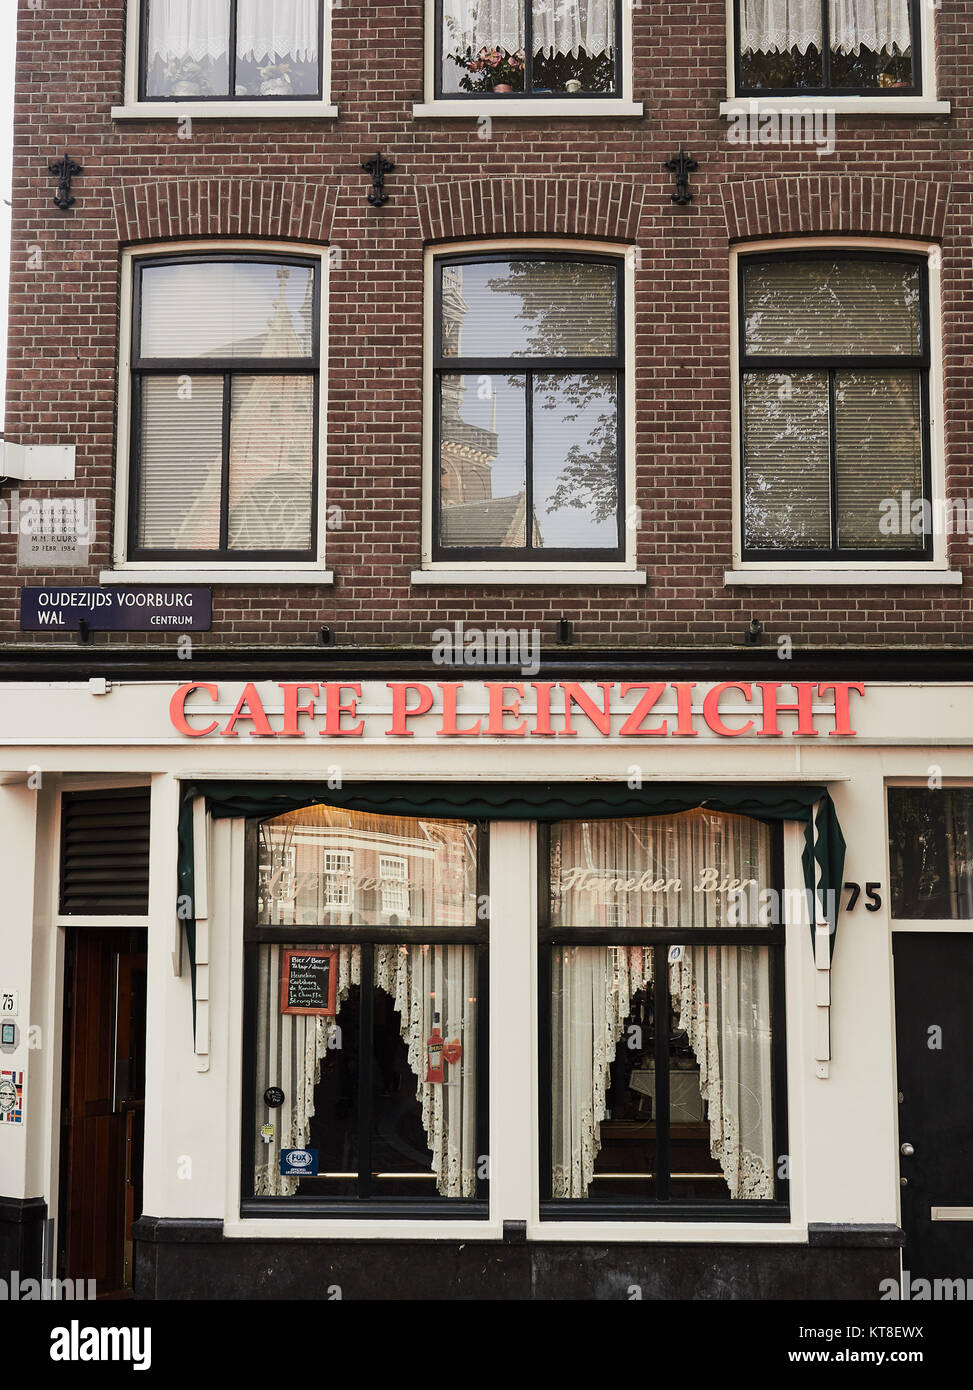 Cafe Pleinzicht in the red light district, Oudezijds Voorburg Wal, Amsterdam, Netherlands Stock Photo